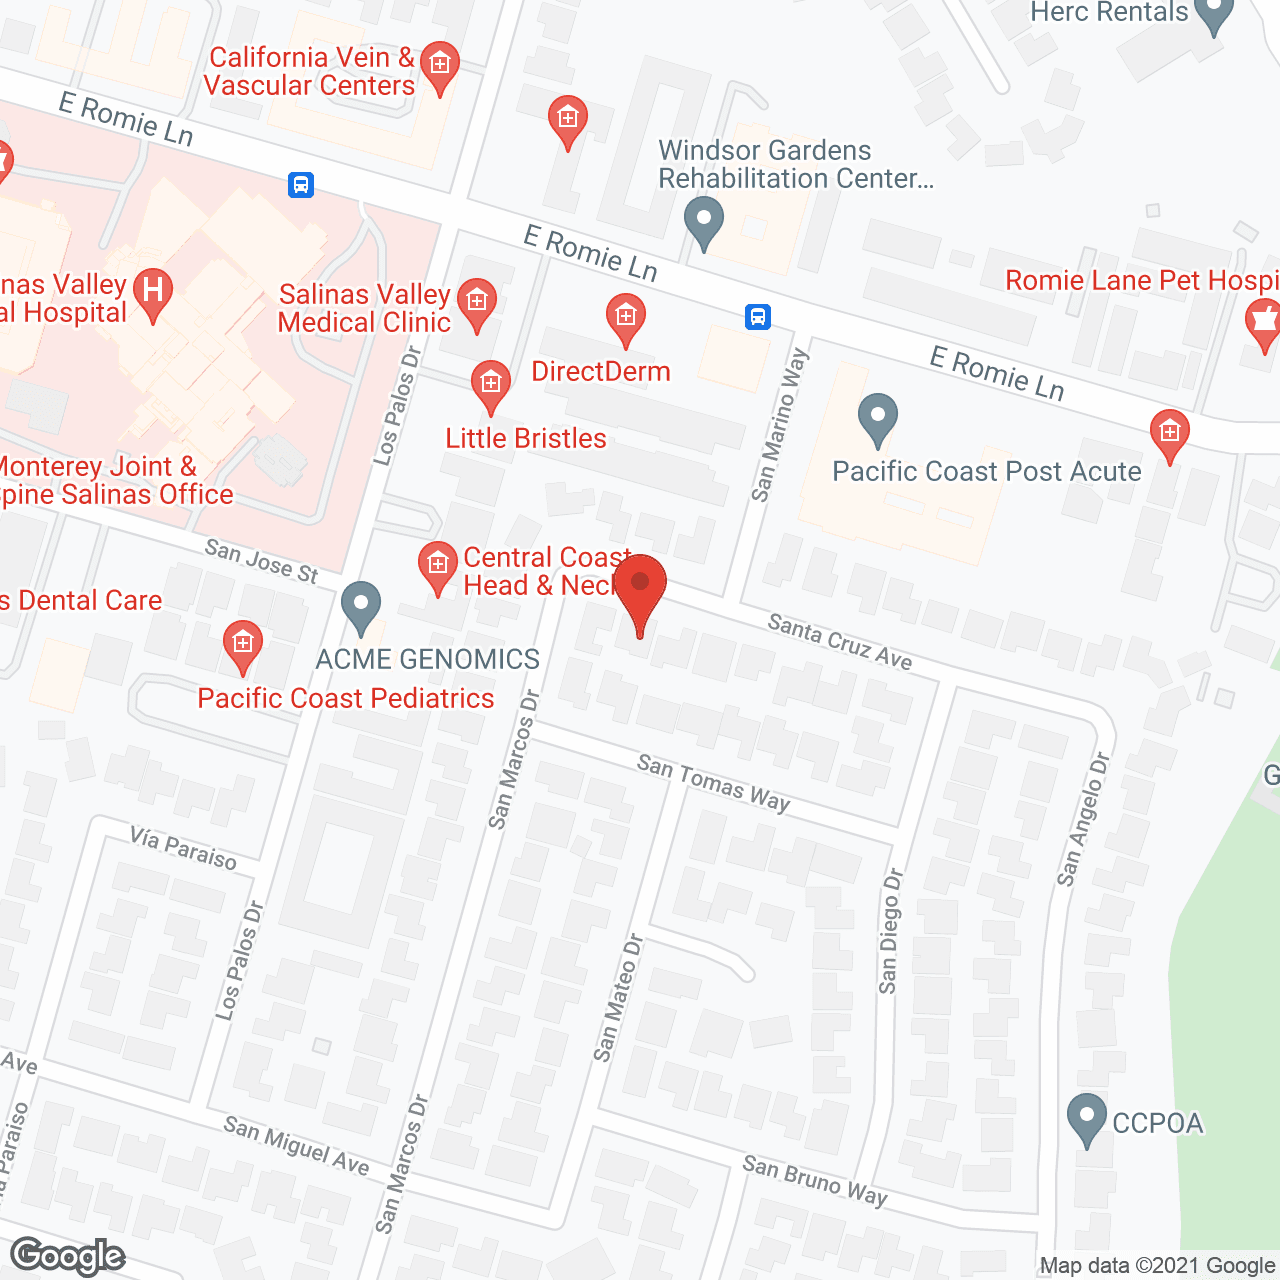 Howard Homes Inc. in google map